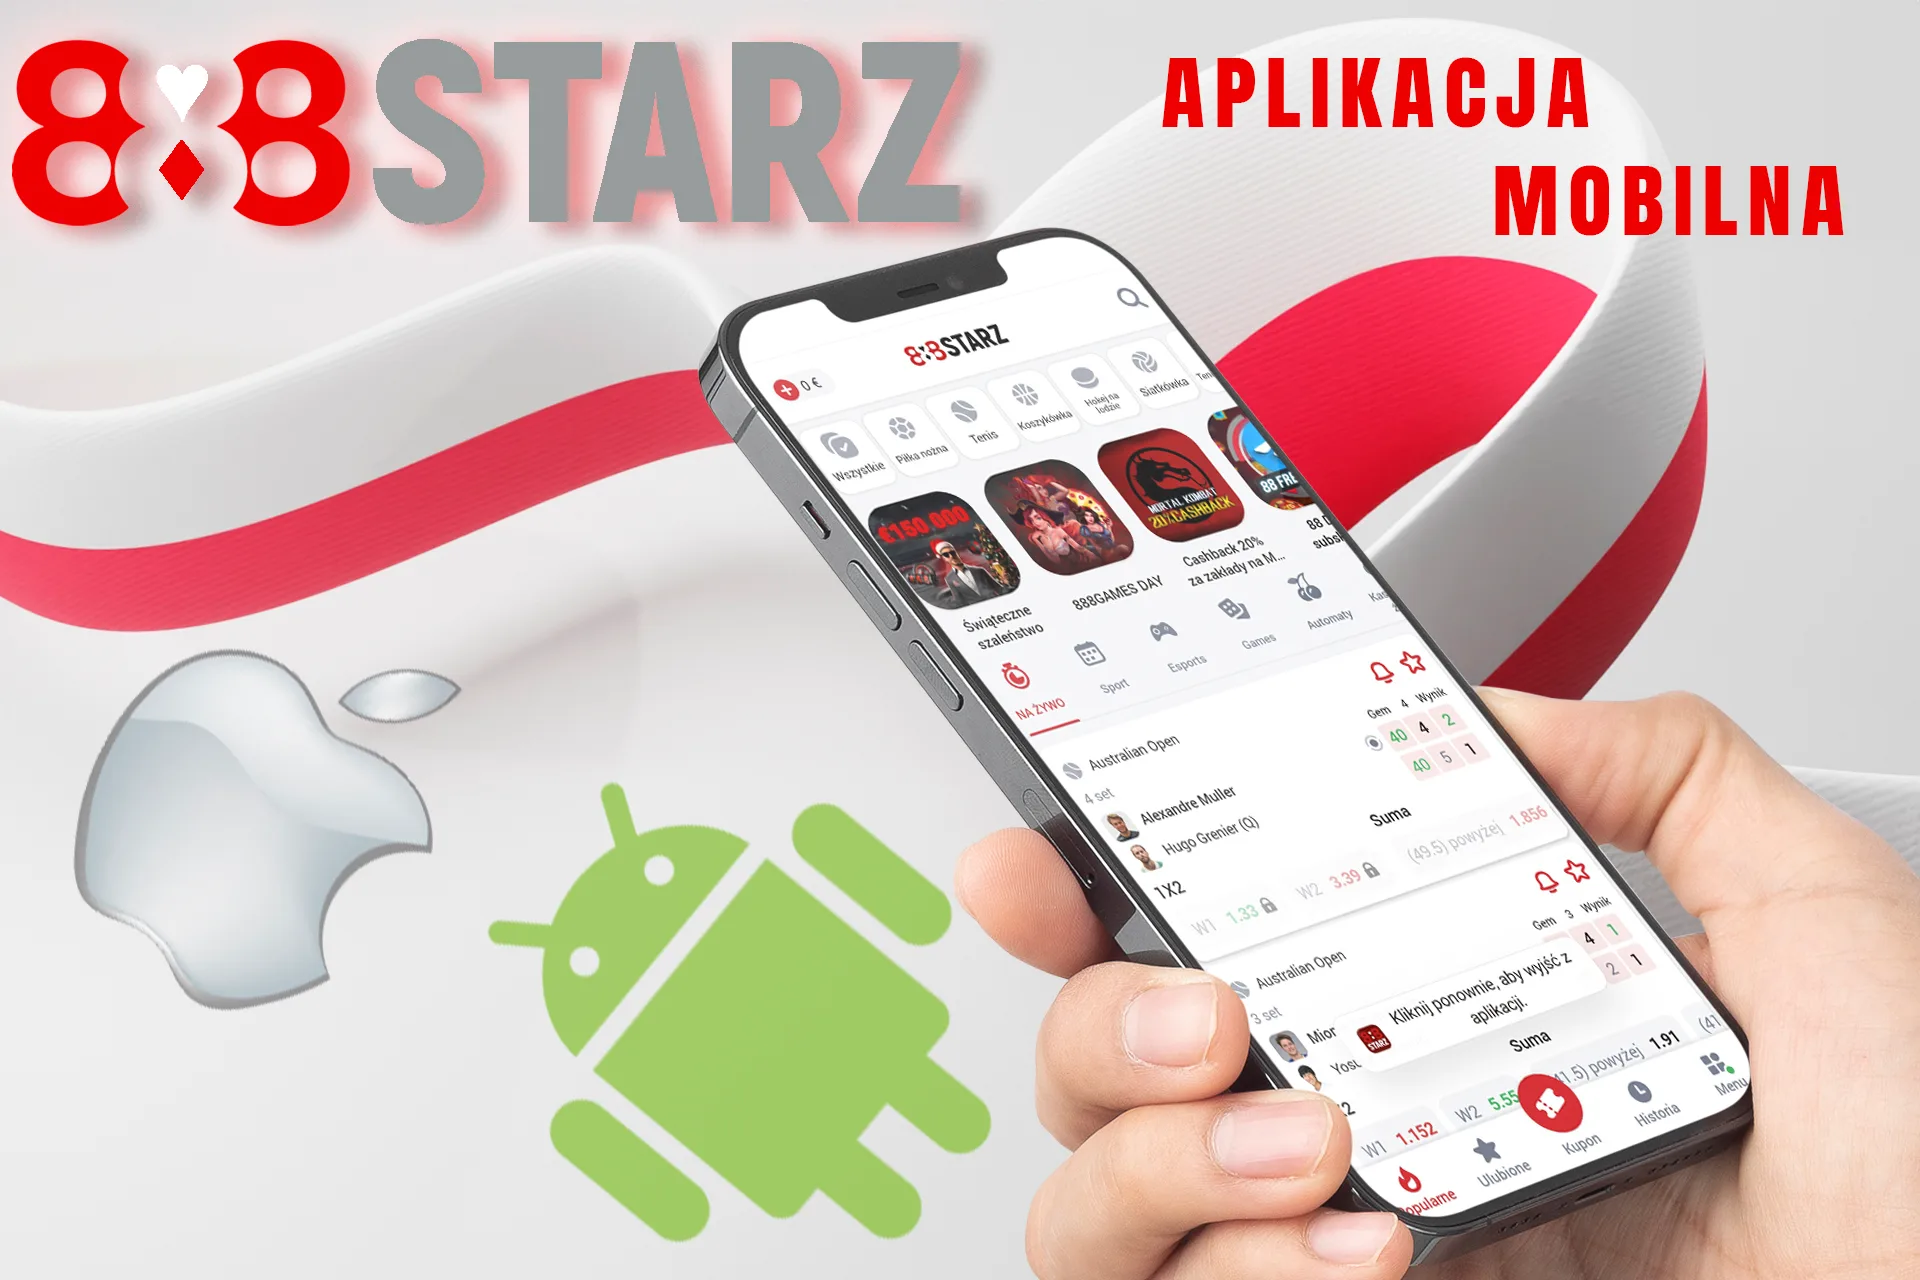 Aplikacja mobilna 888Starz na Androida i iOS